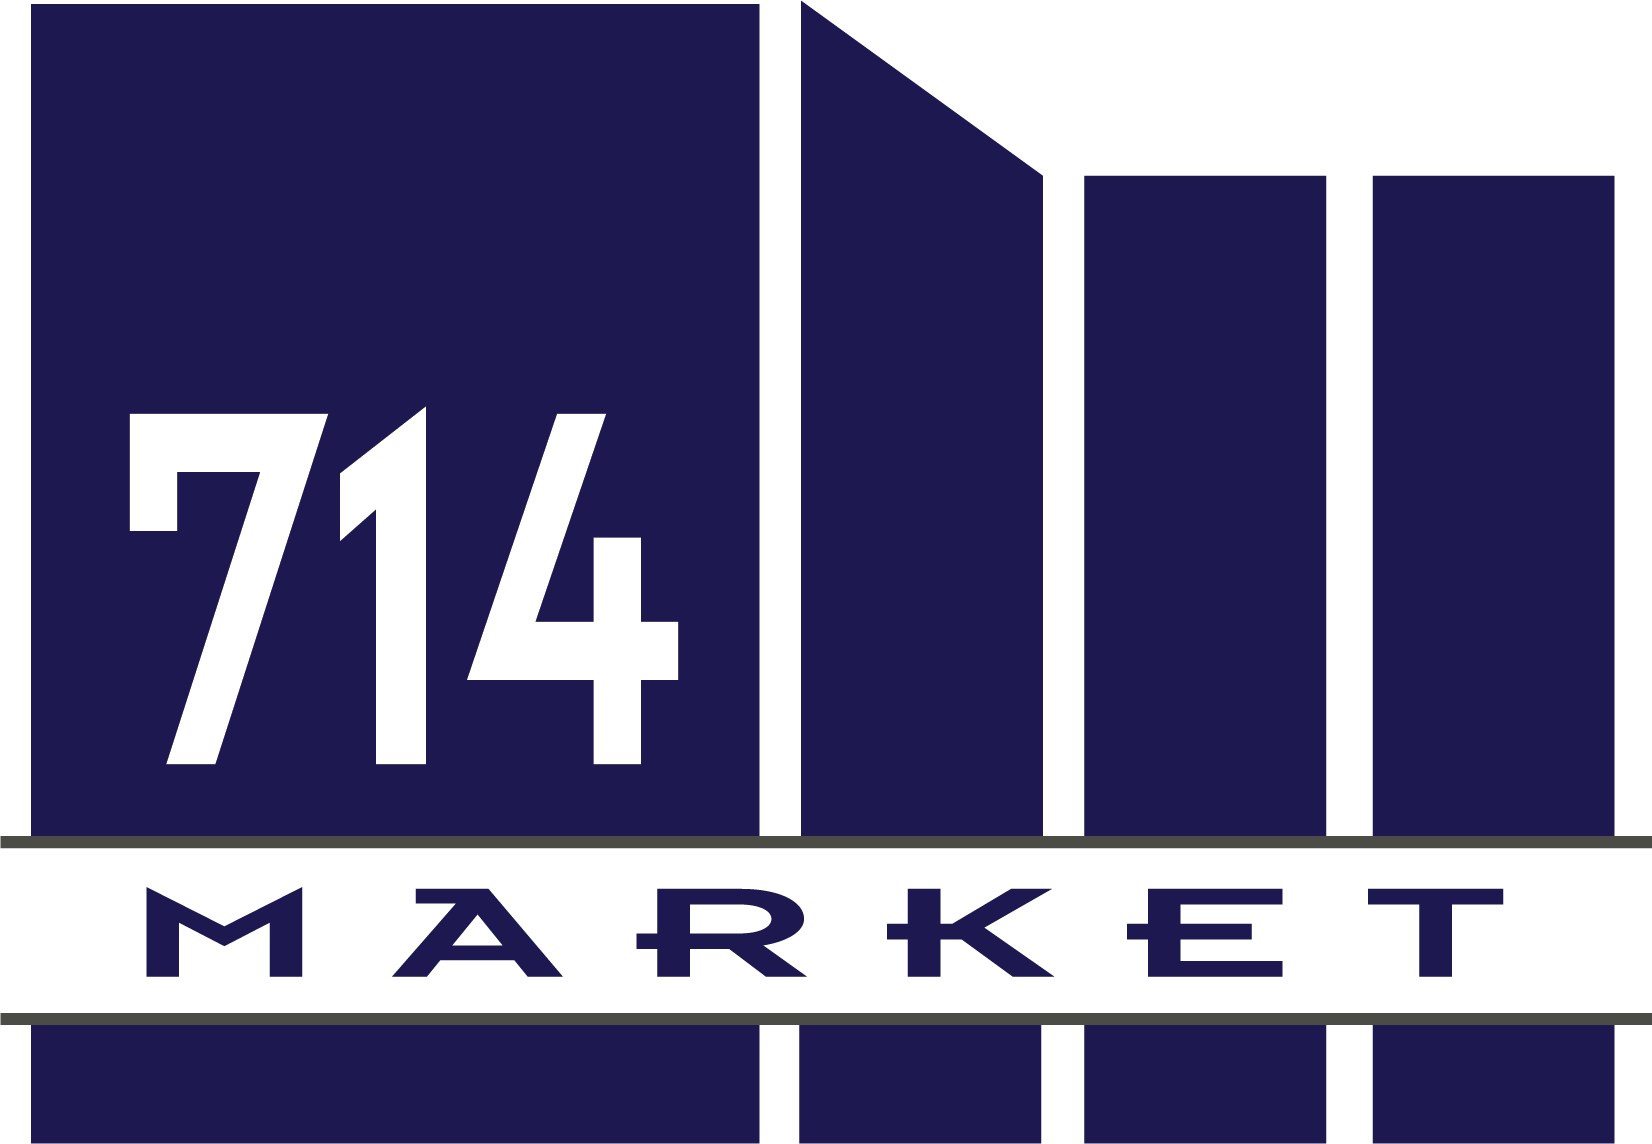 714 market street logo